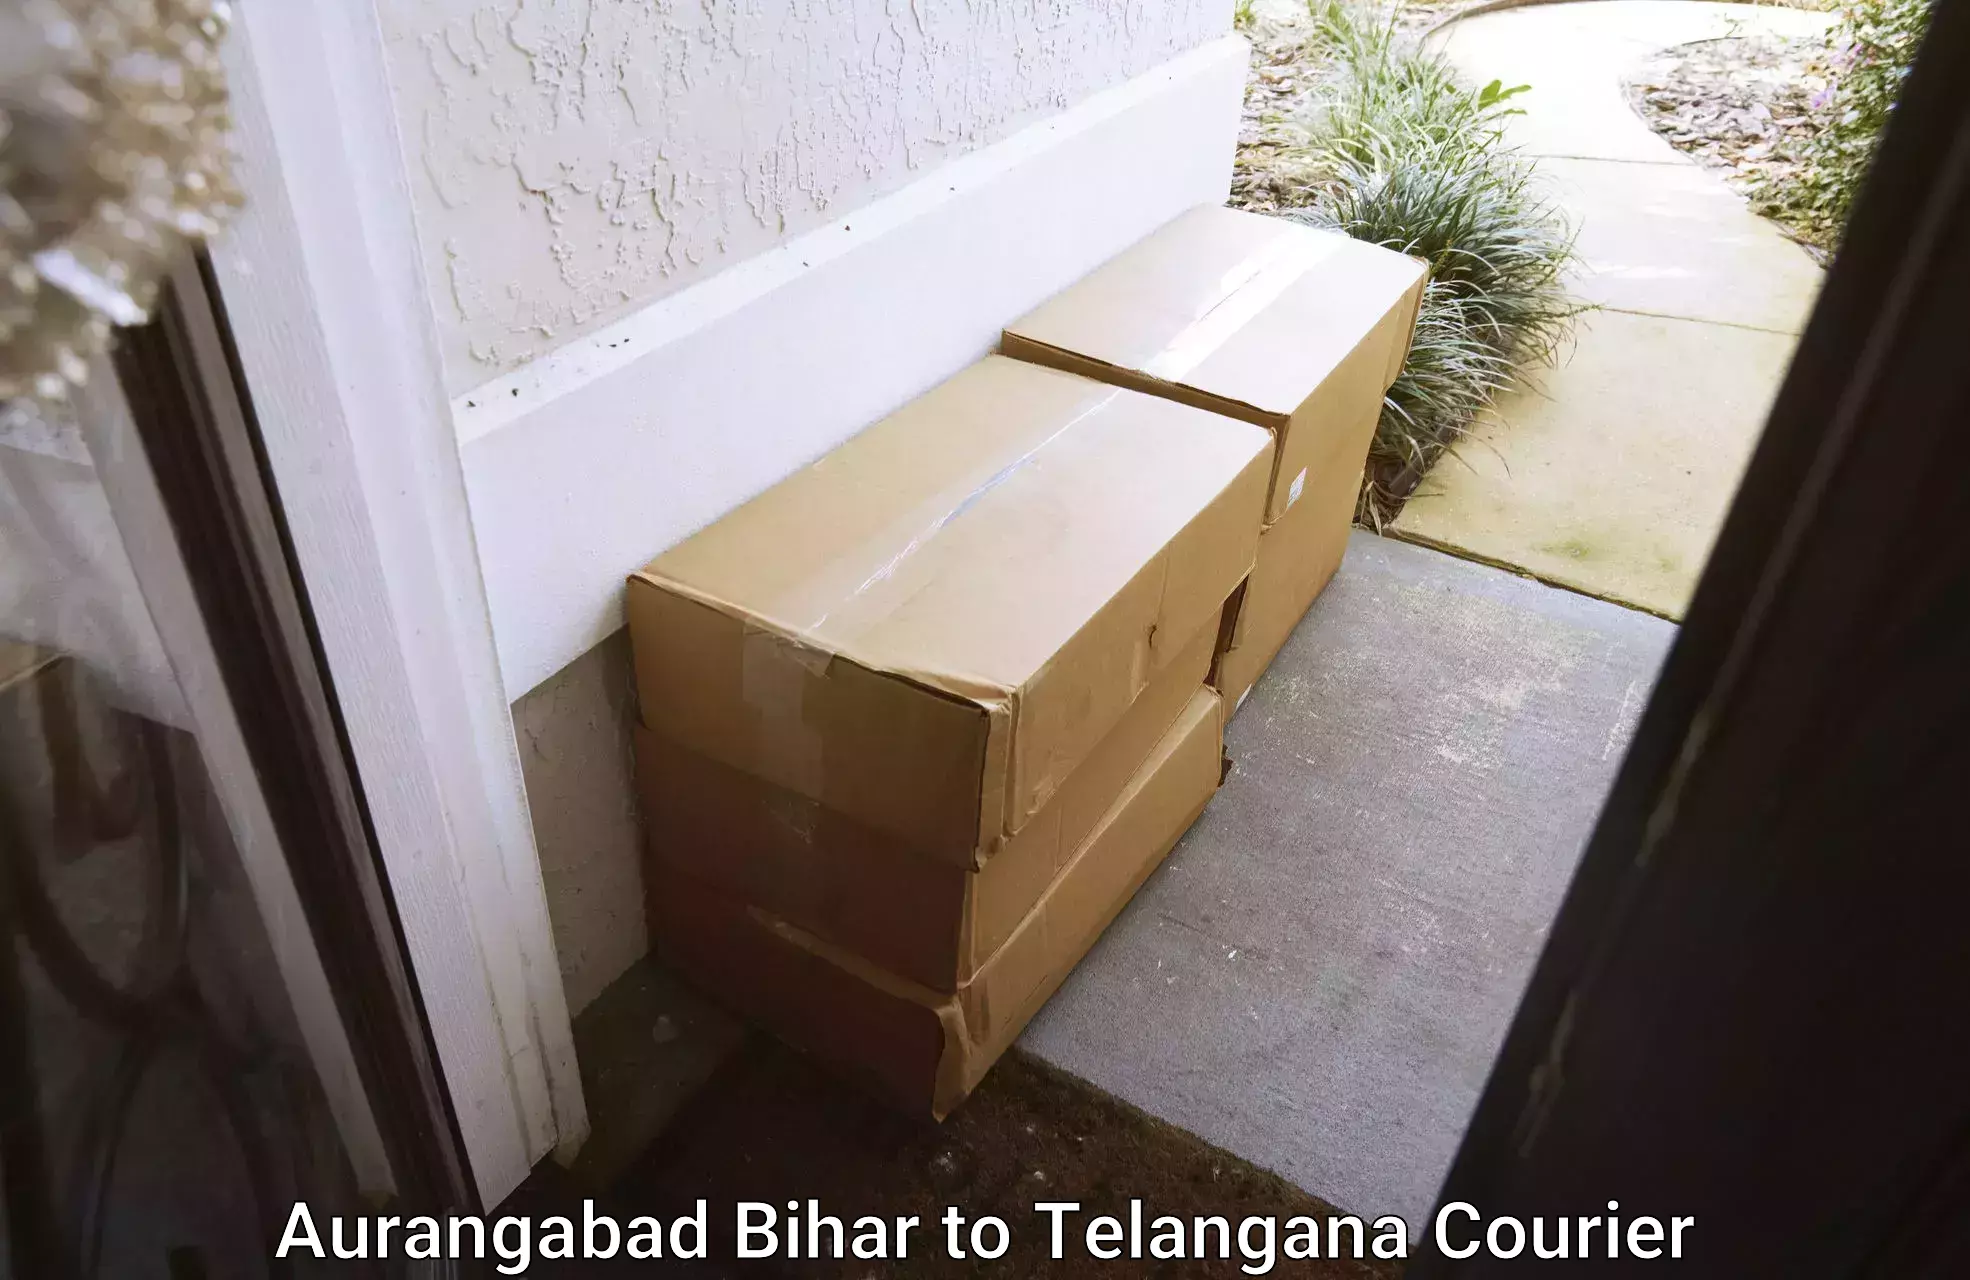 Professional moving assistance Aurangabad Bihar to Achampet